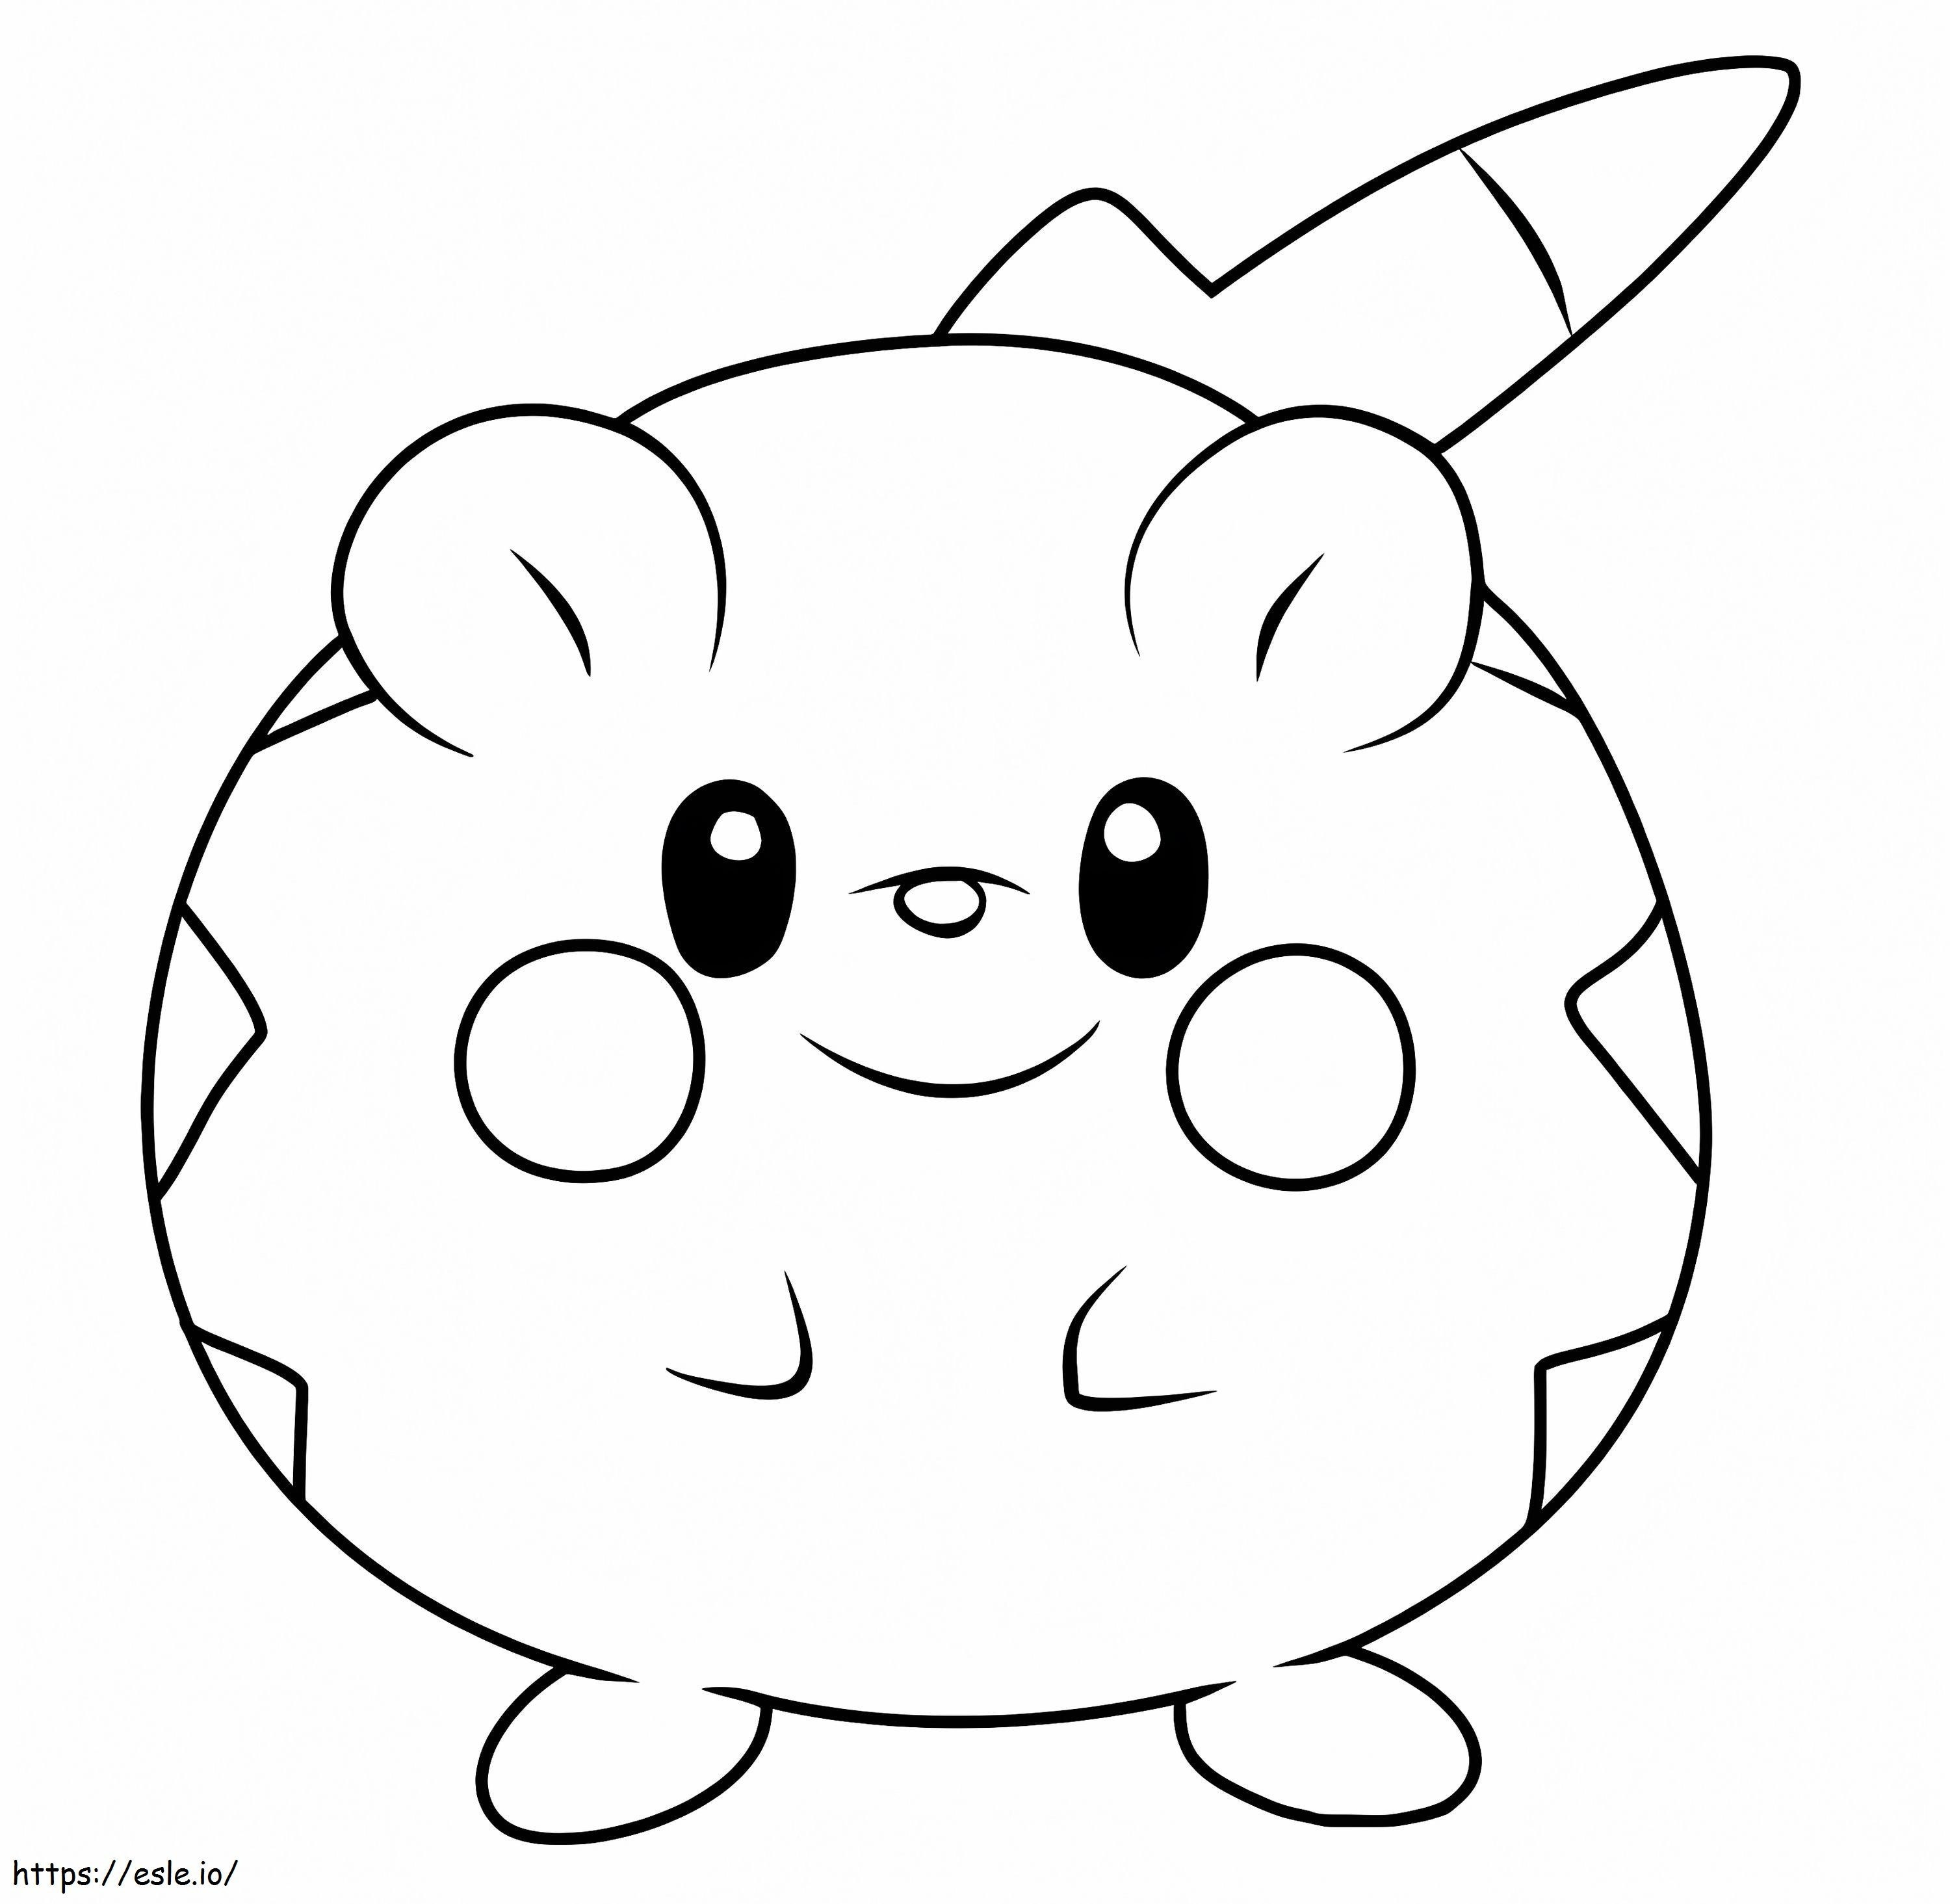 Togedemaru Pokemon coloring page